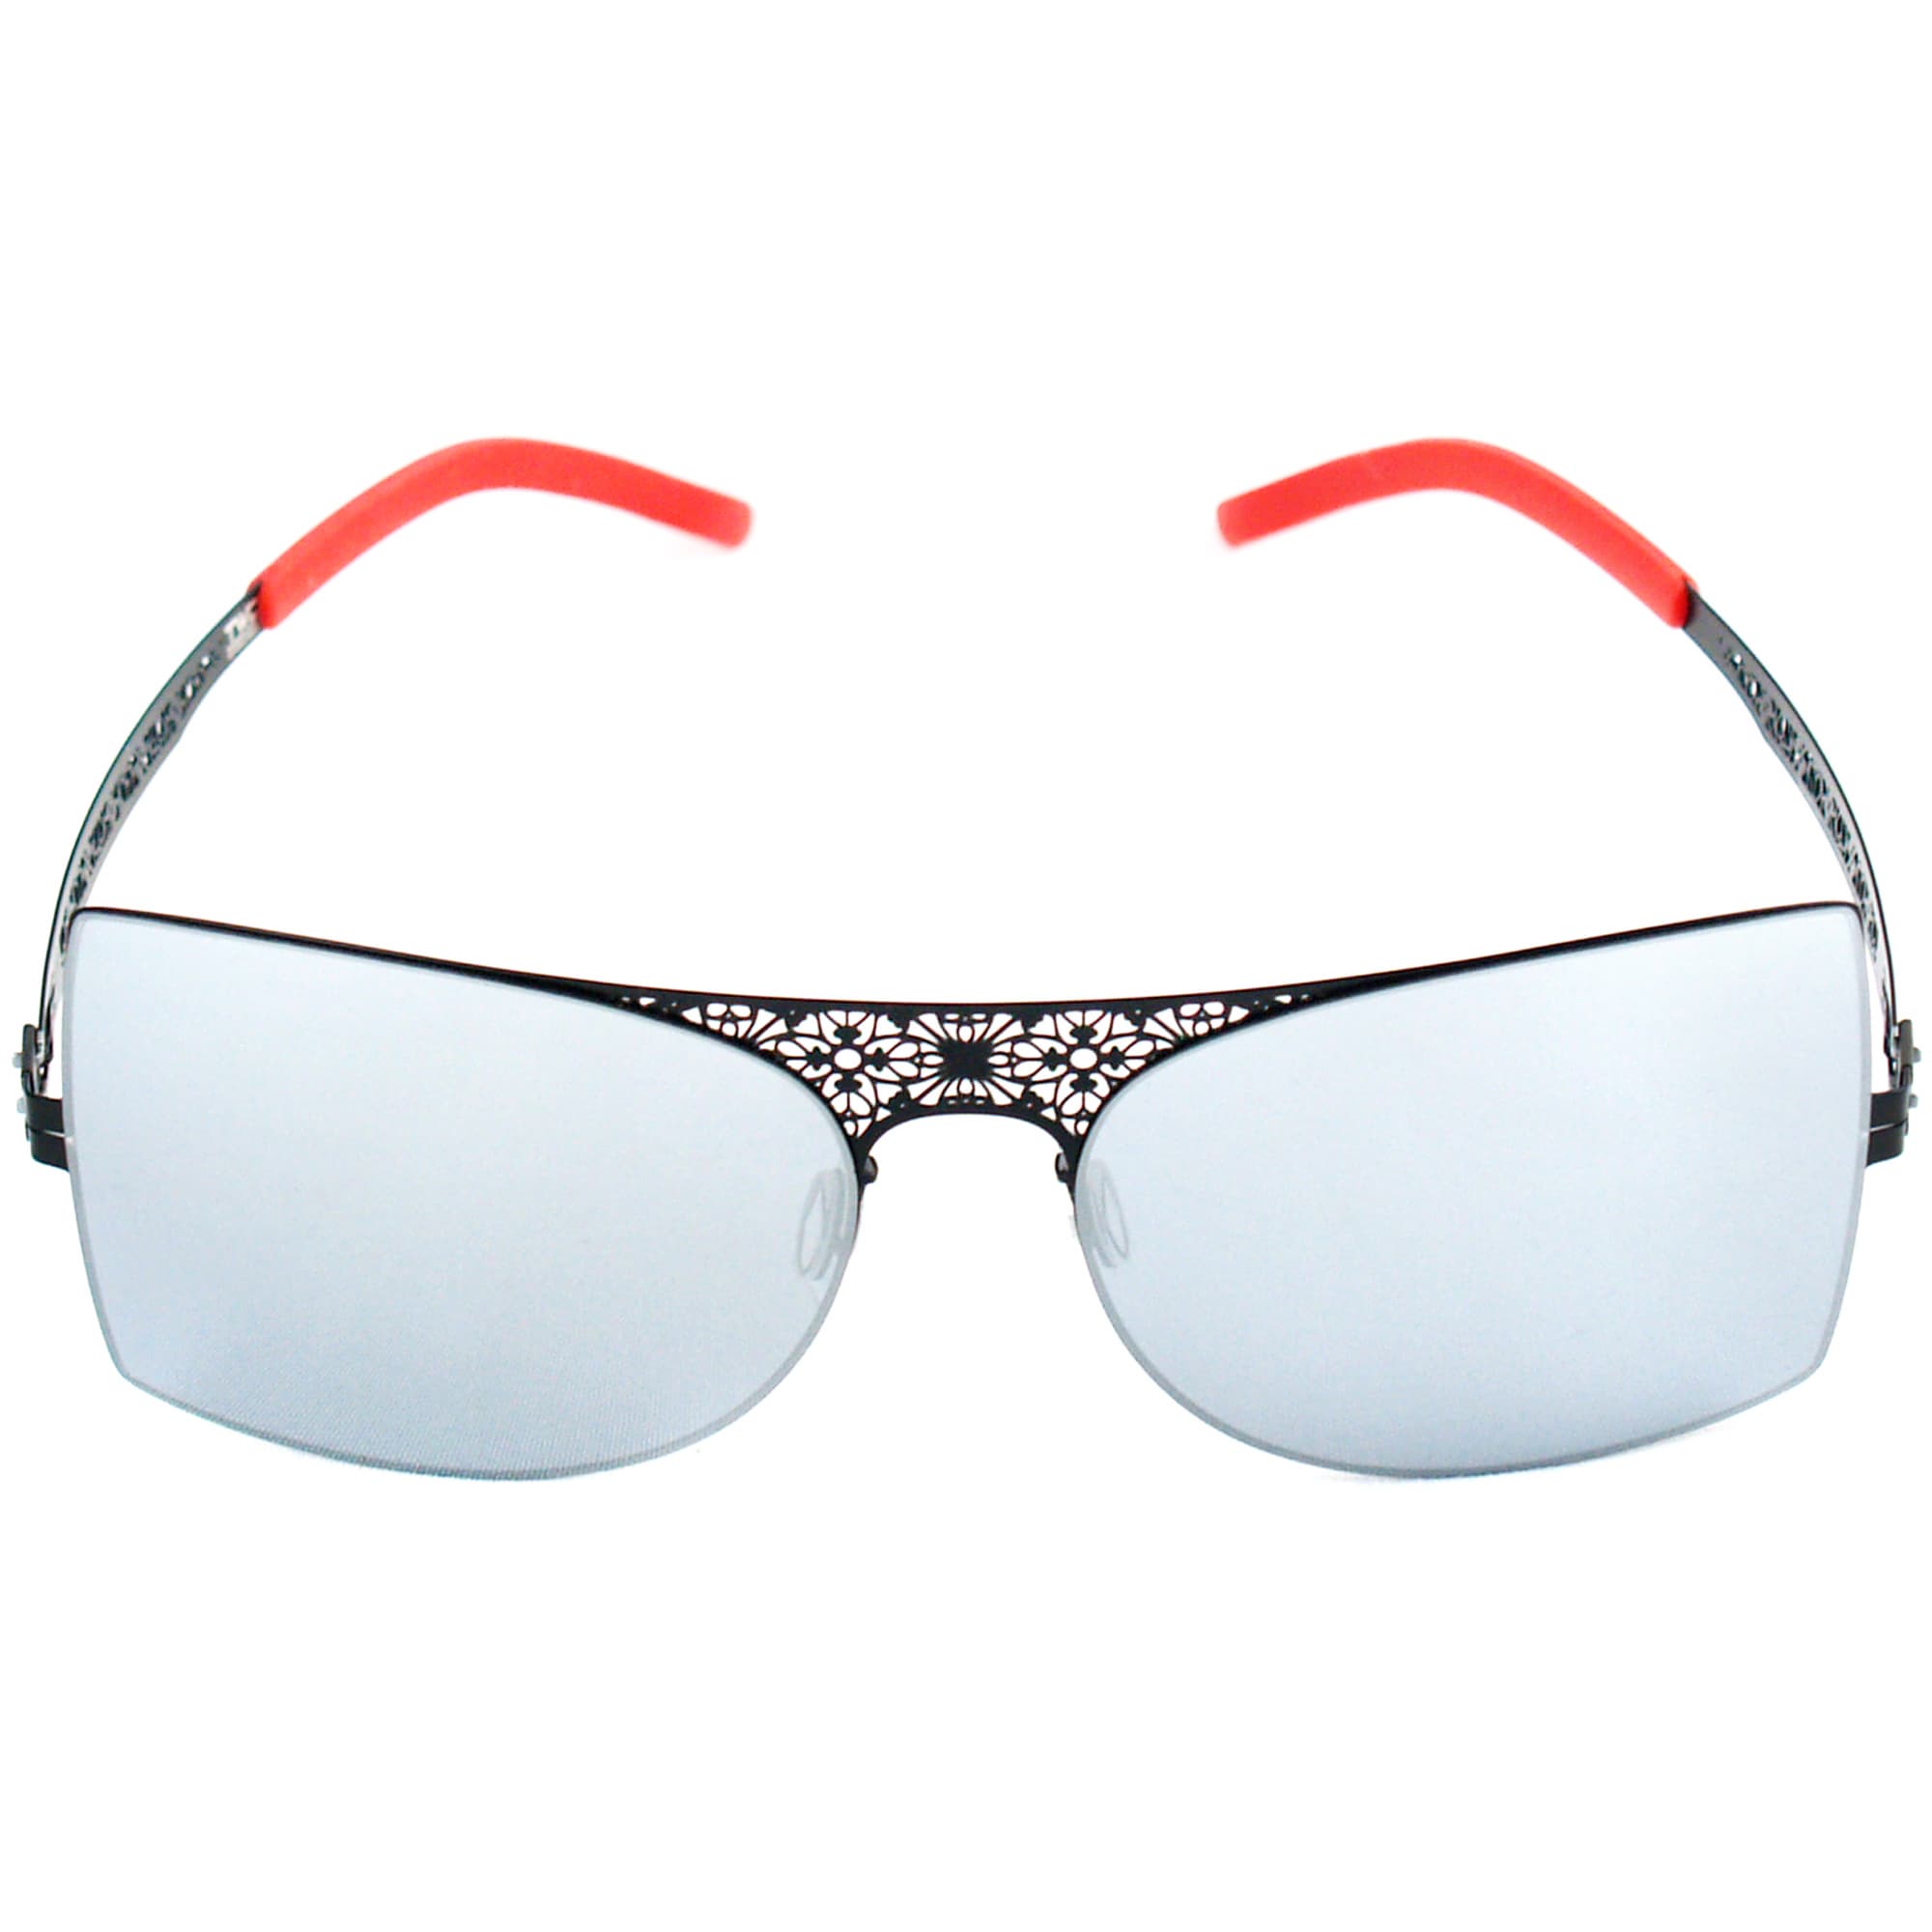 Garden Squared Design Thin Stainless Steel  Frame Sunglasses